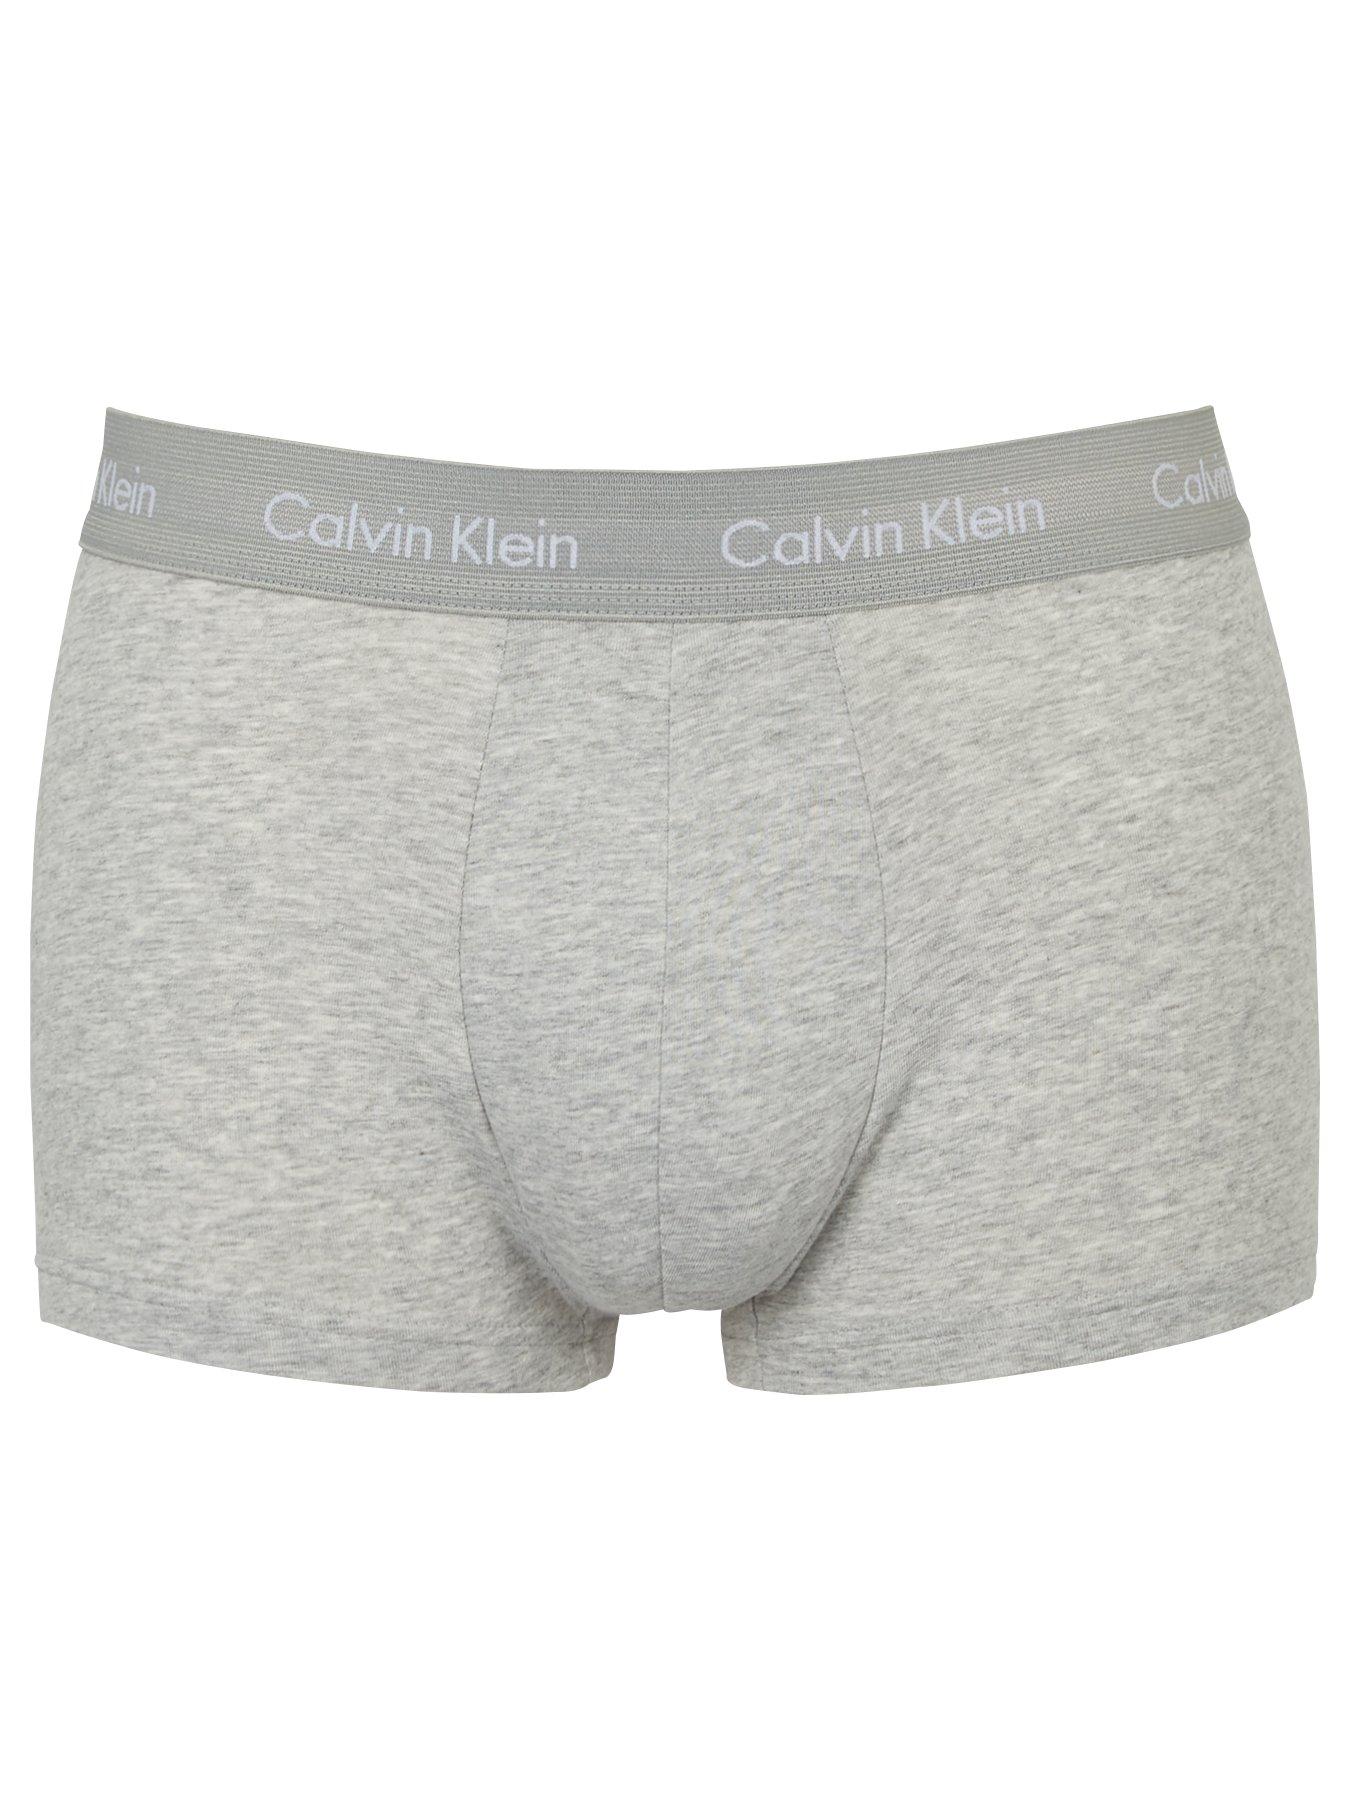 Calvin Klein 3 Pack Plain / Print Low Rise Trunks - Black/Grey | Very.co.uk